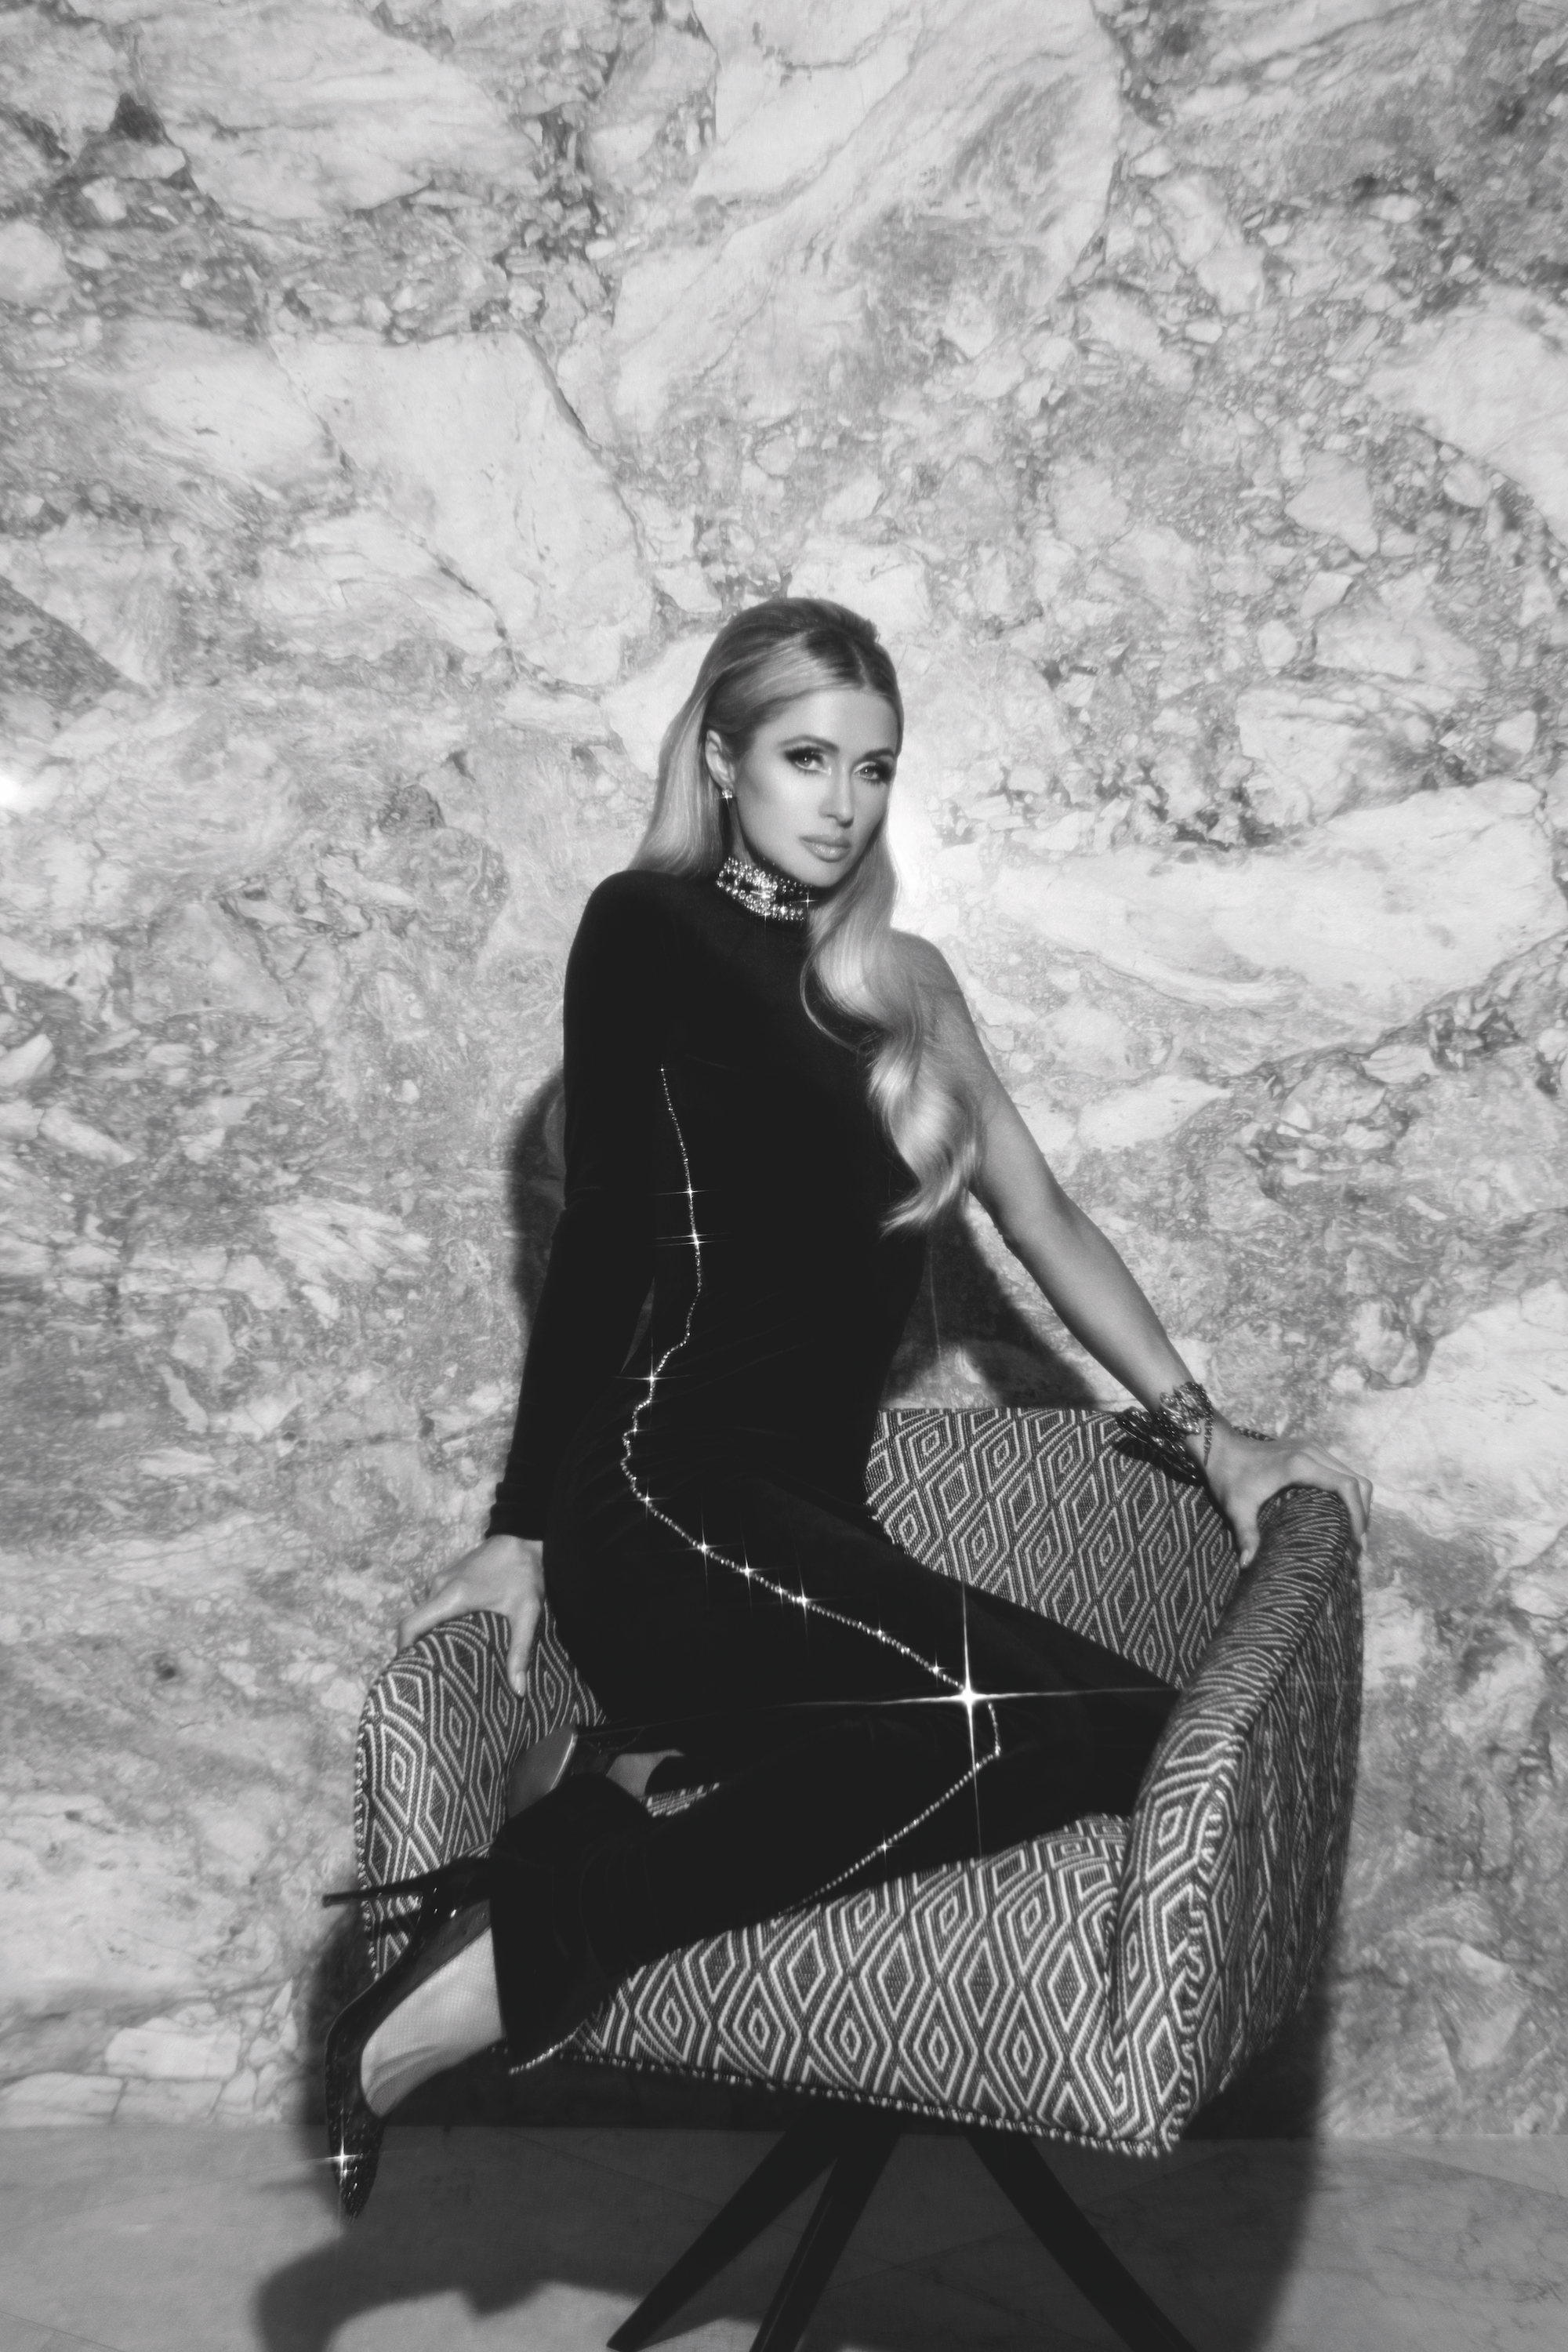 Fotos n°6 : Paris Hilton Reozing Sex Appeal en New Shoot!